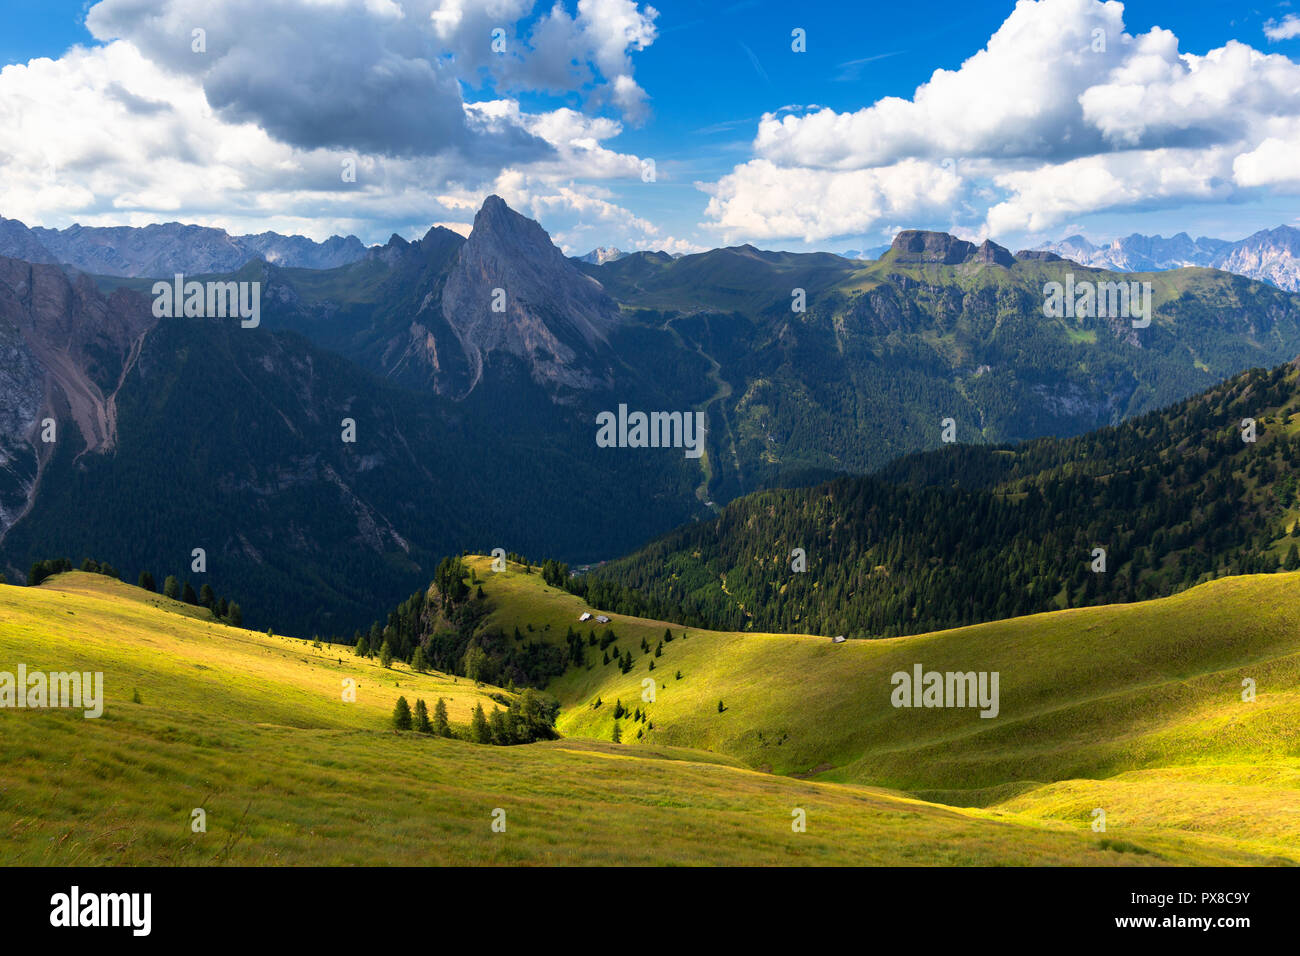 Lichtspiele in der Weide. Viel del Pan Pfad, Pordoijoch, Val di Fassa, Trentino, Dolomiten, Italien, Europa. Stockfoto